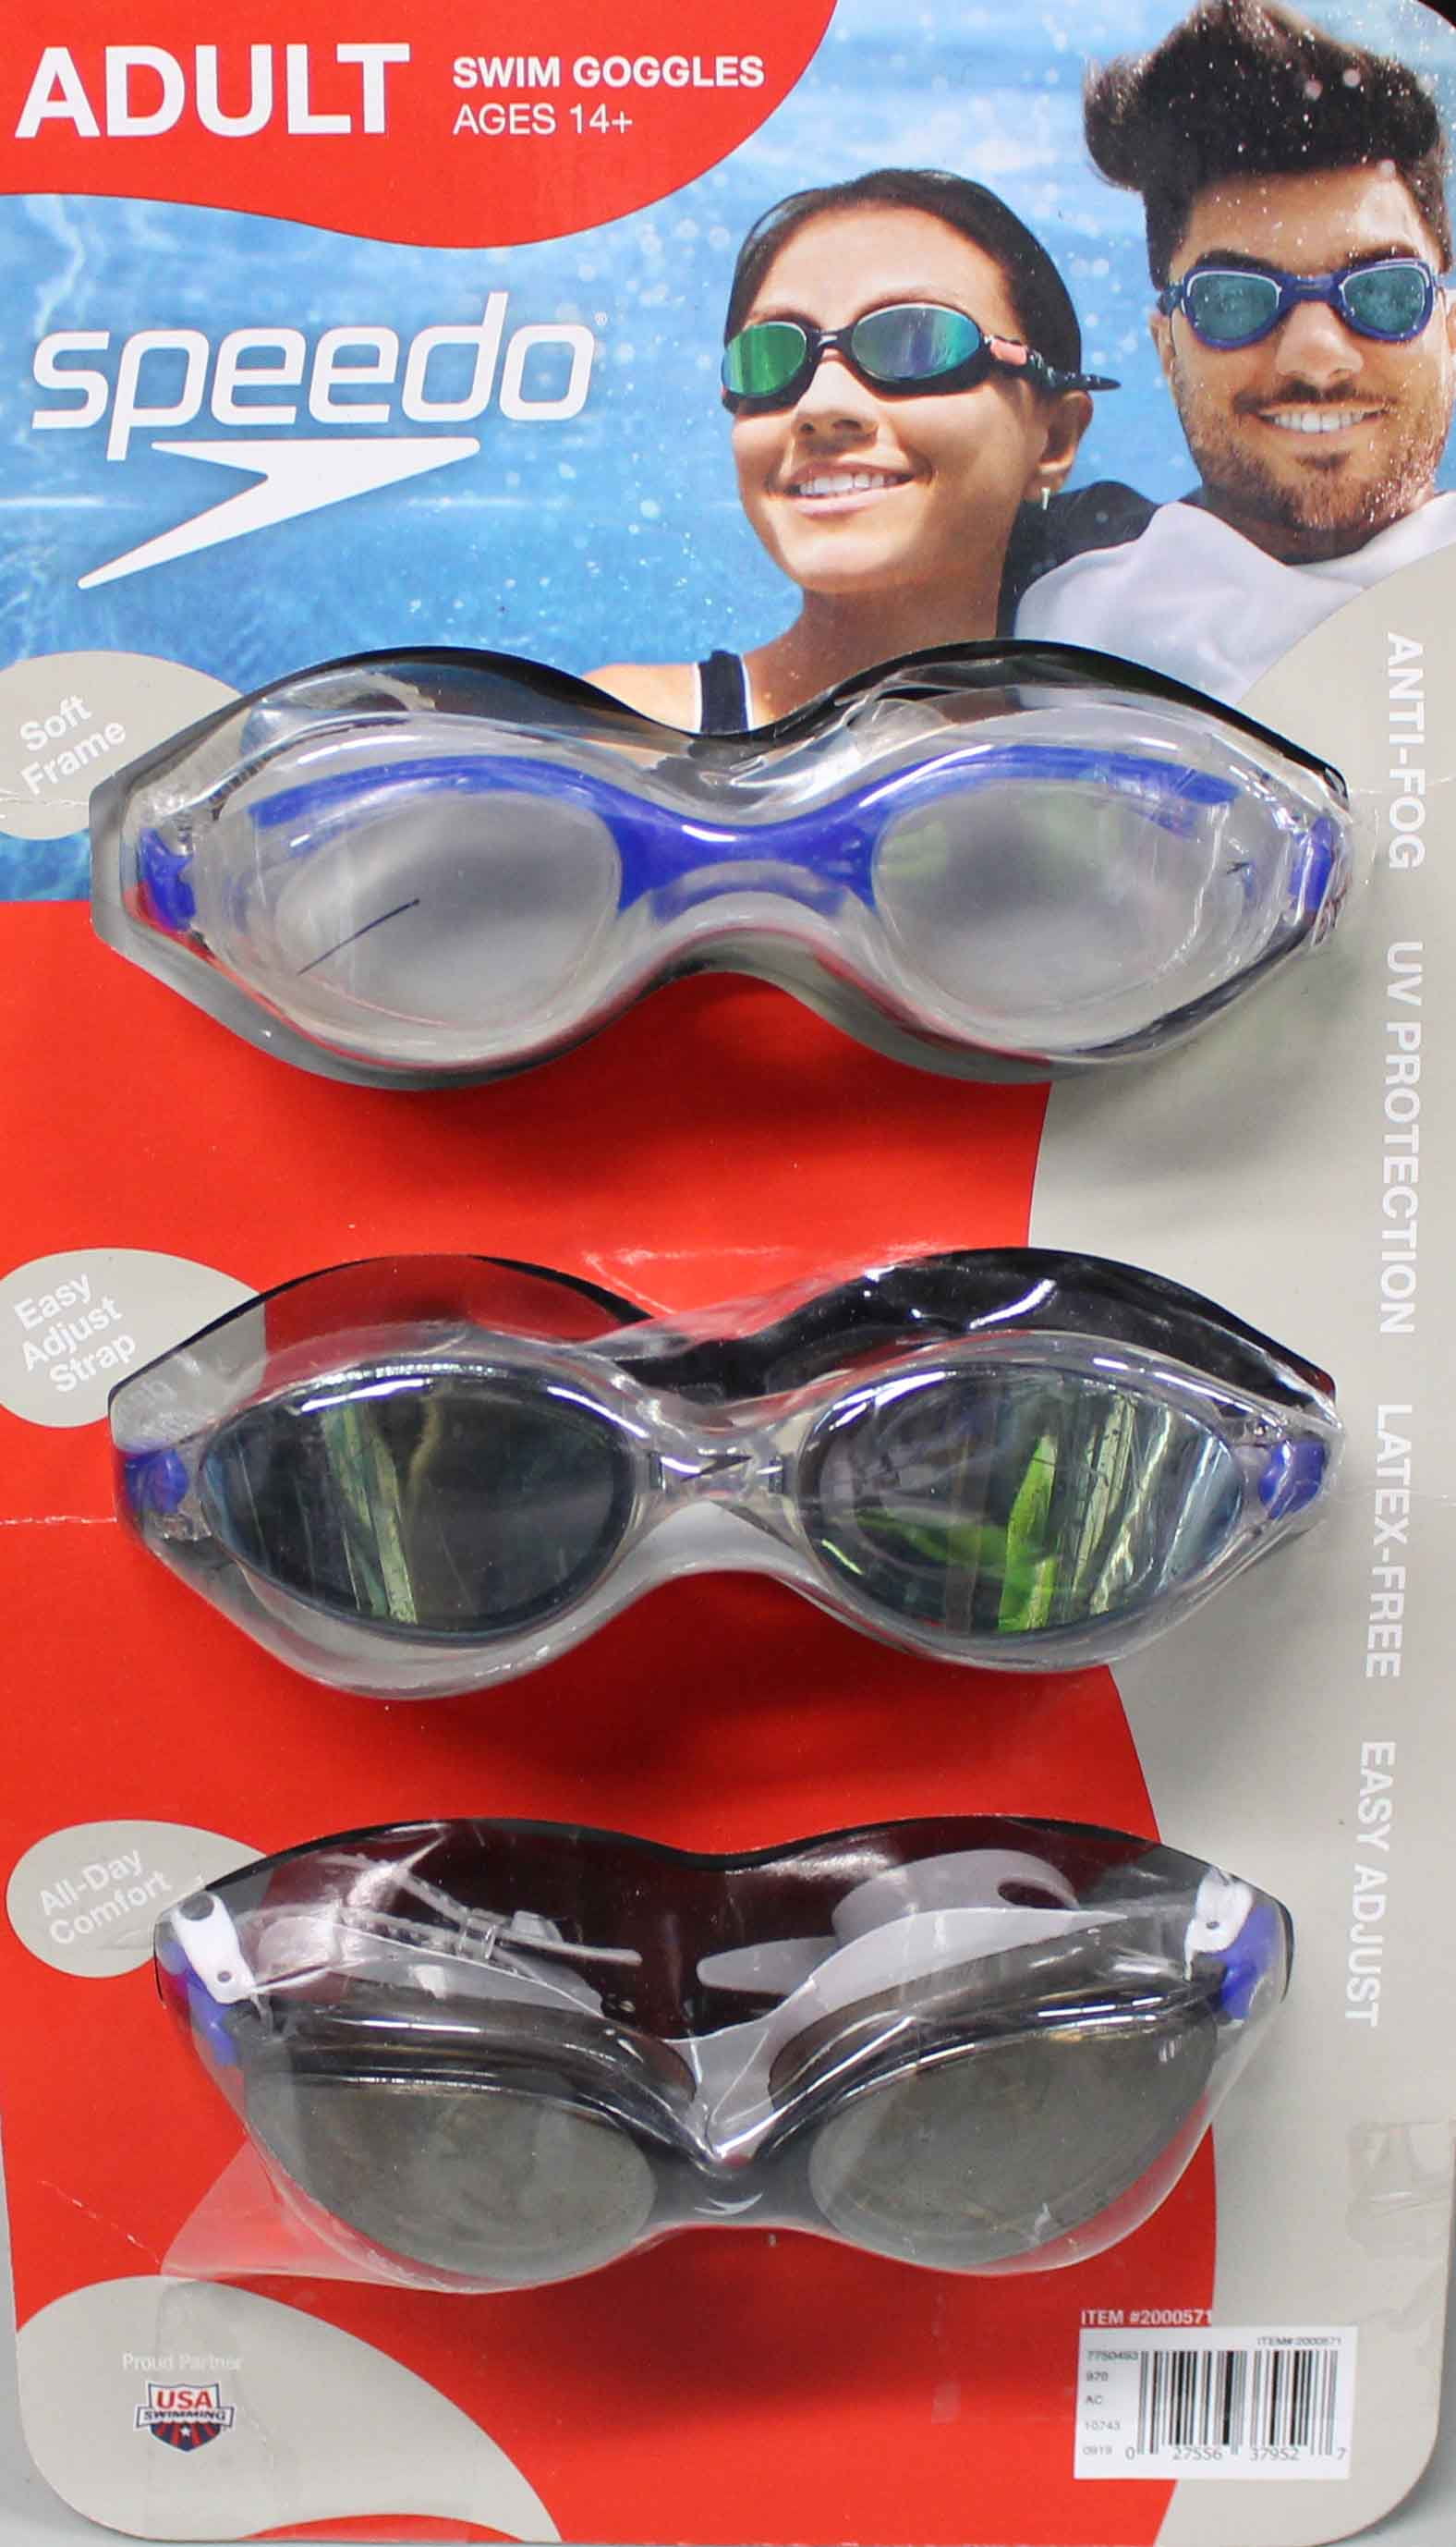 Speedo Adult Swim Goggles UV and Anti-Fog Protection Latex Free 3-pack Age 14+ 